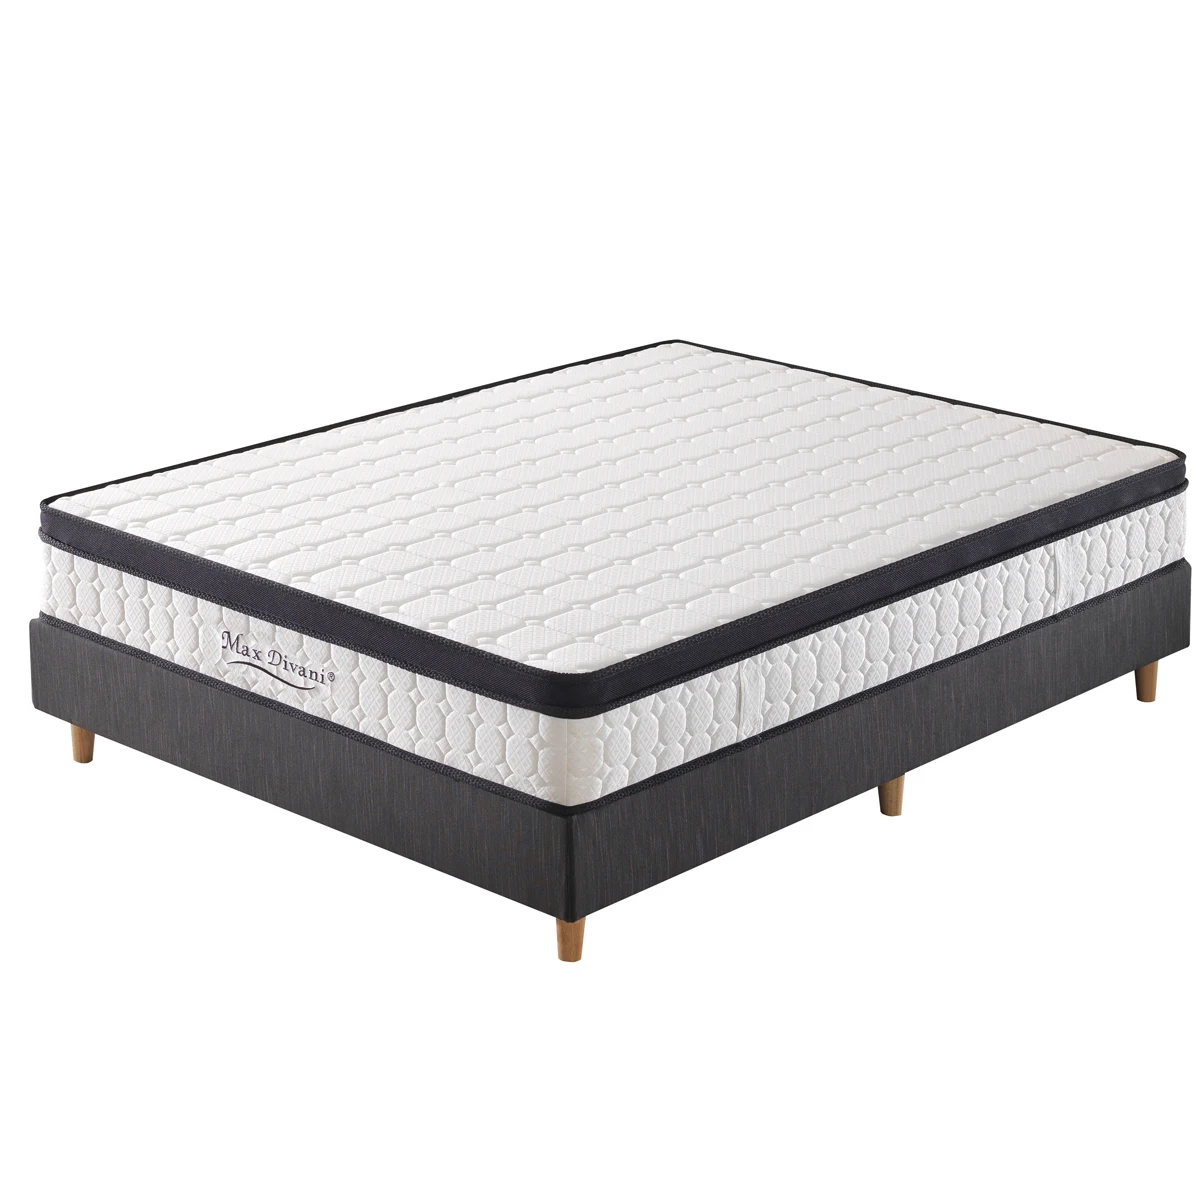 

Eco-Friendly Good sleep Comfortable Bed Mattress cheap price mattress